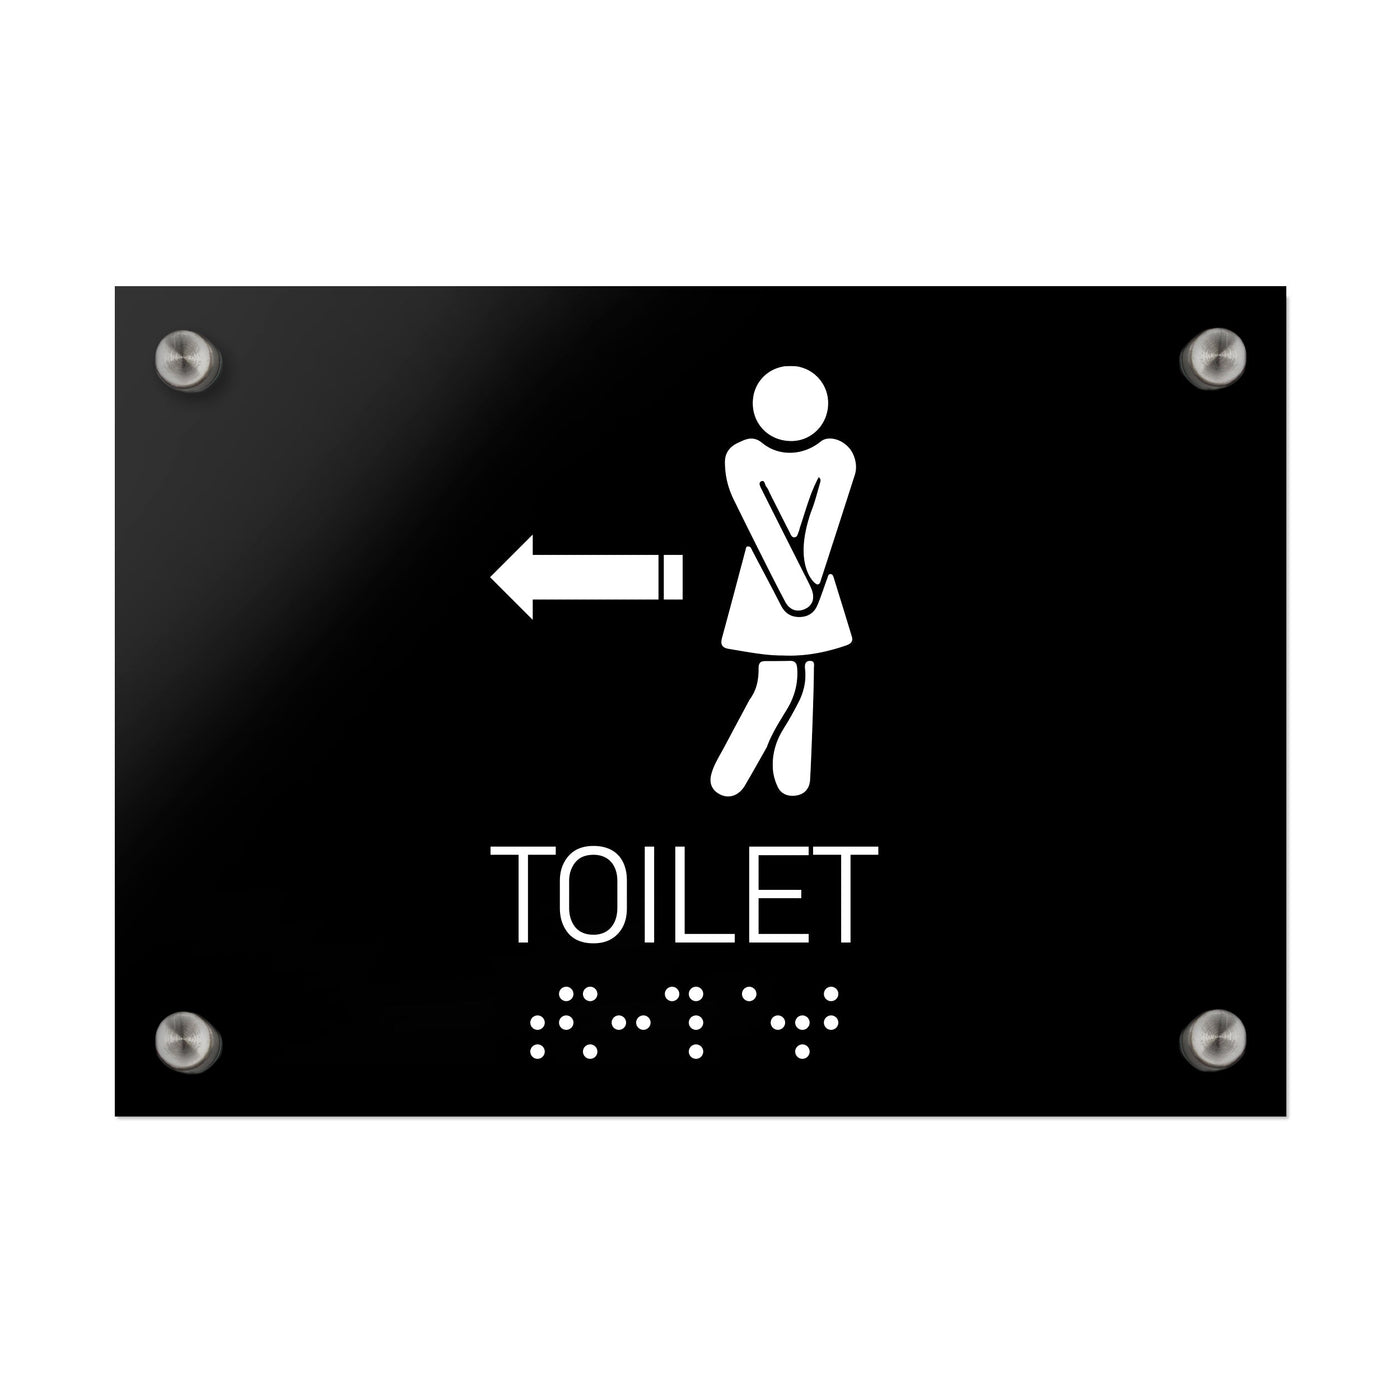 Bathroom Signs - Women Directional Restroom Sign - Black Acrylic